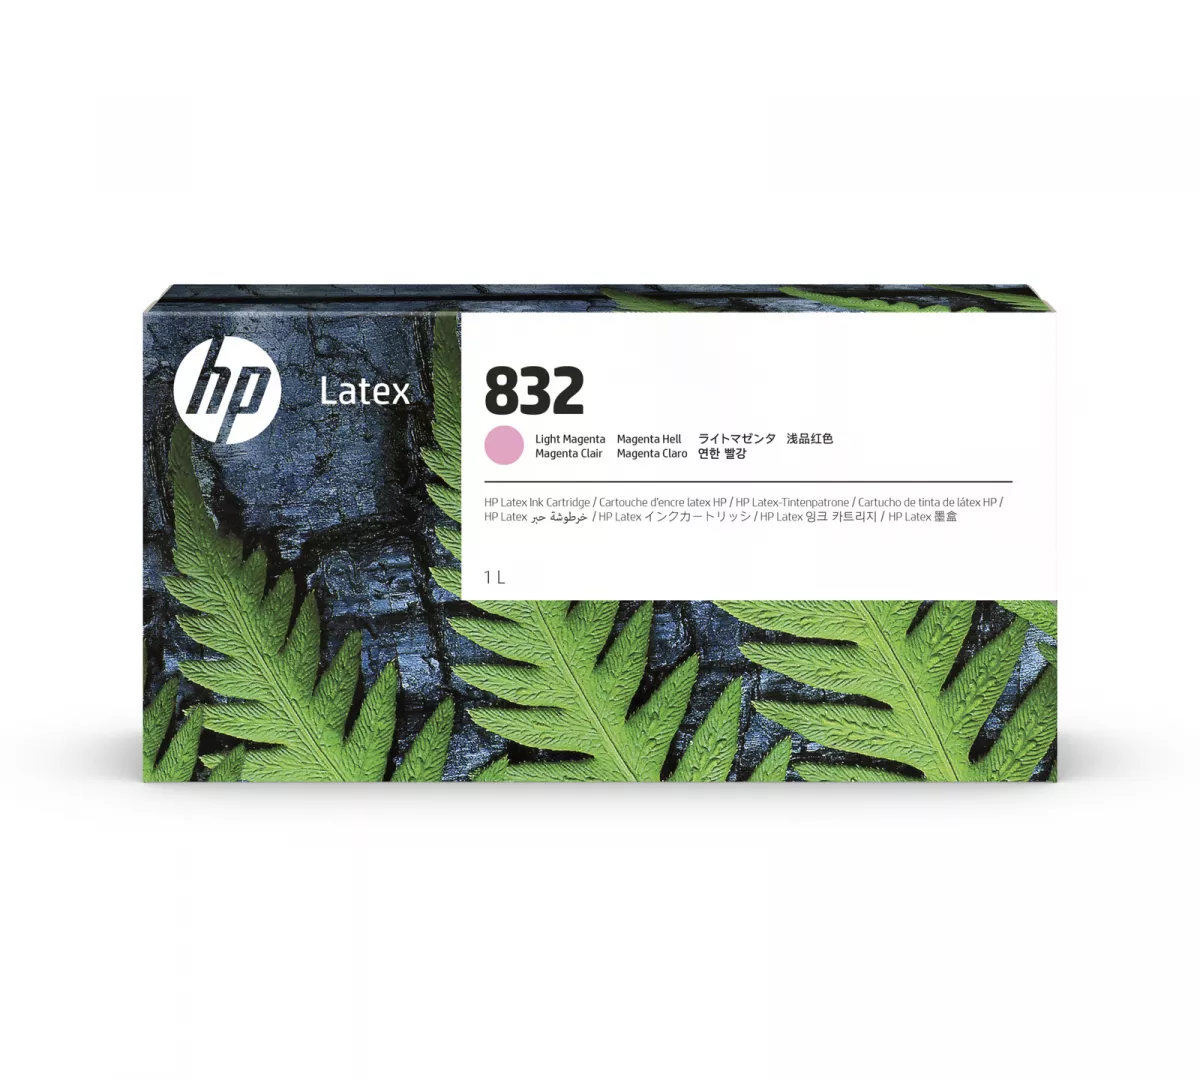 HP 832 Light Magenta Latex Ink Cartridge 1 L 1